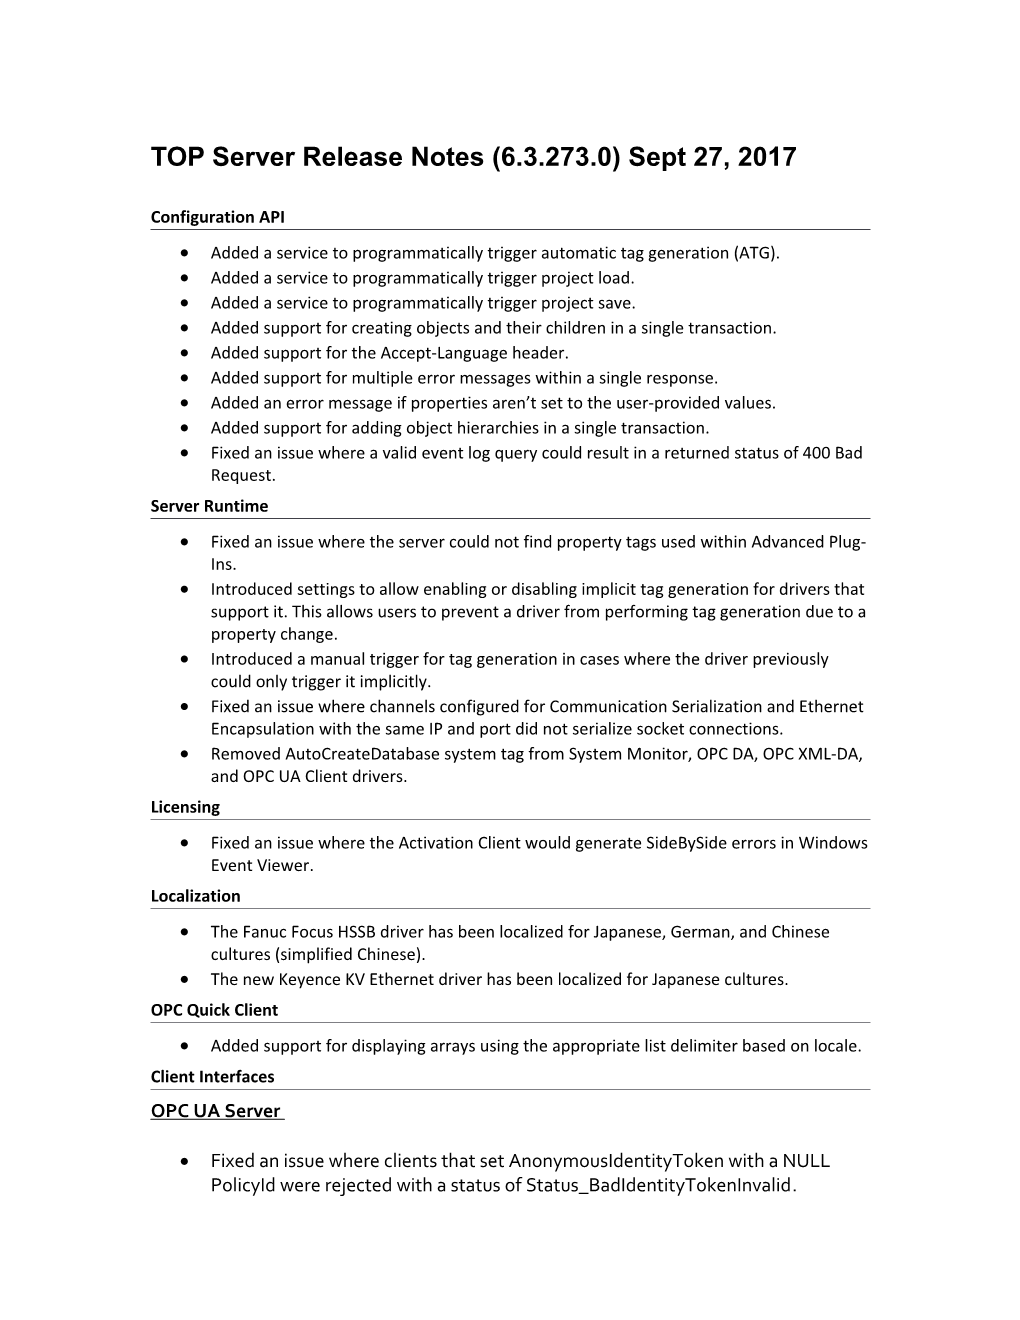 TOP Server Release Notes (6.3.273.0) Sept27, 2017